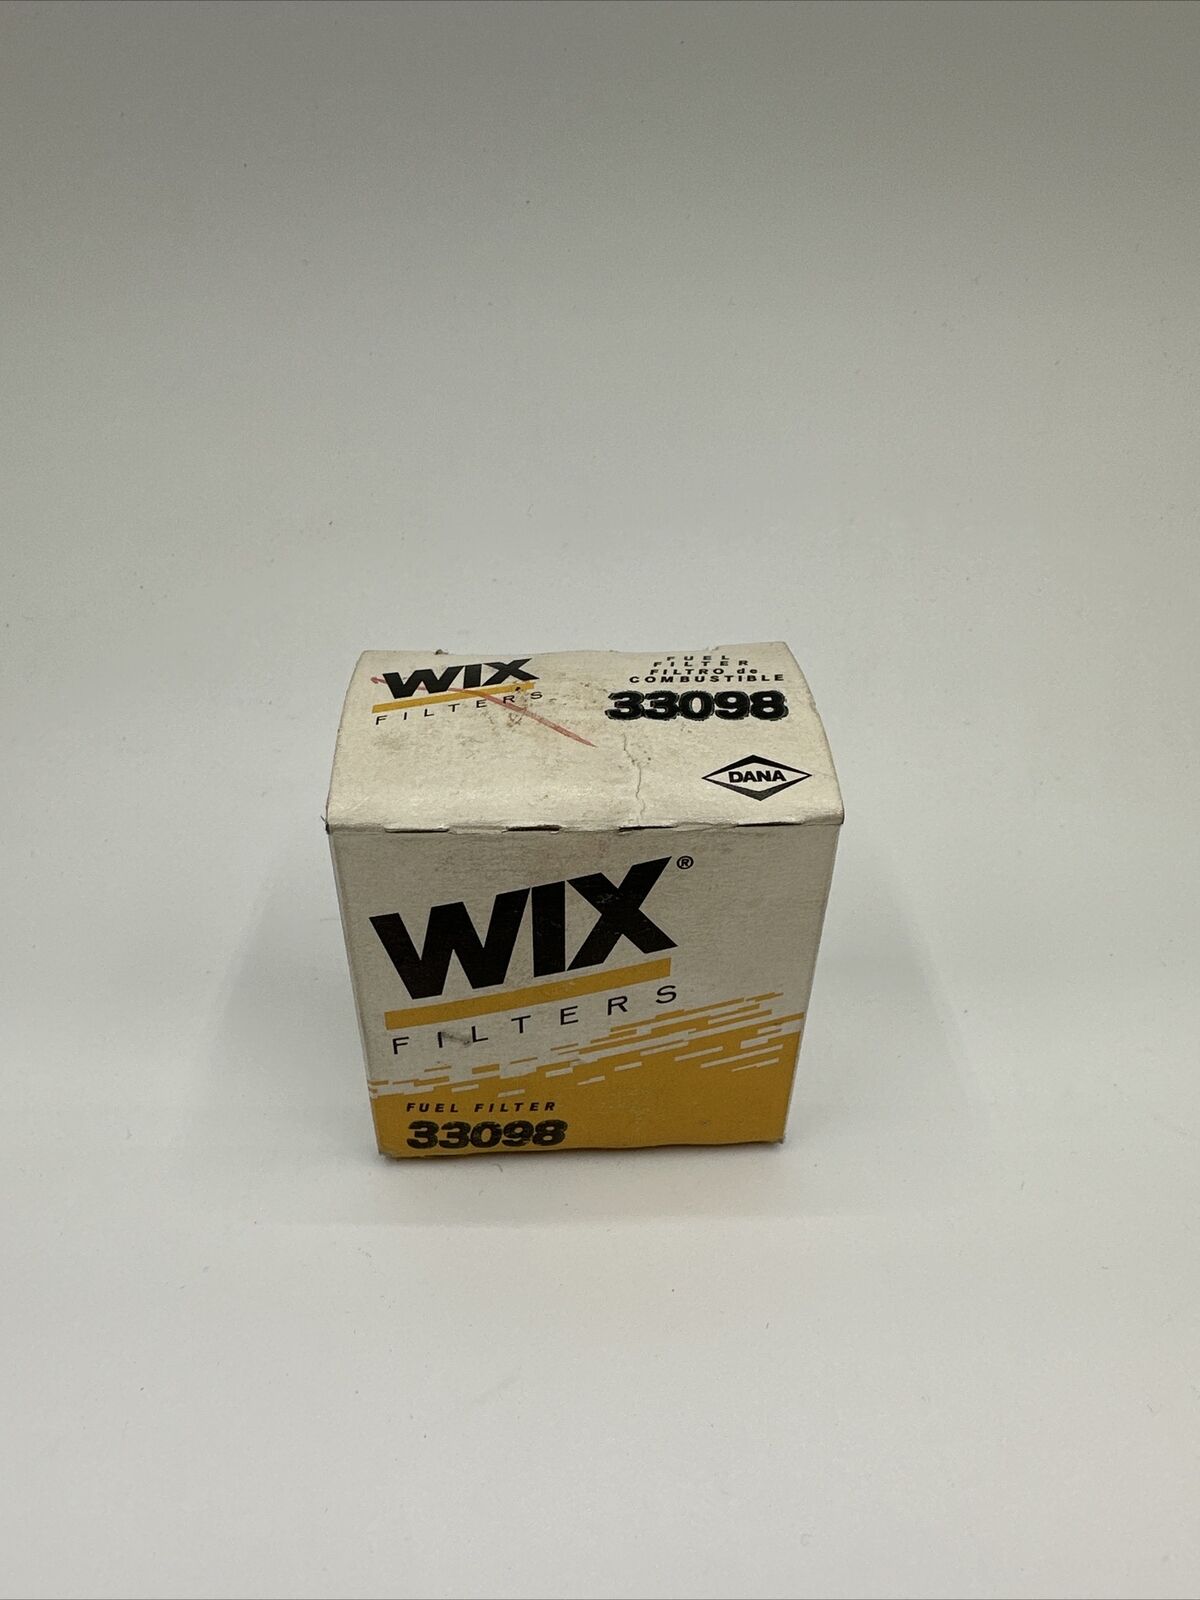 Wix 33098 Fuel Filter Fits Ford E-150 E-250 E-350 F-250 F-350 1983-1987, F+S!